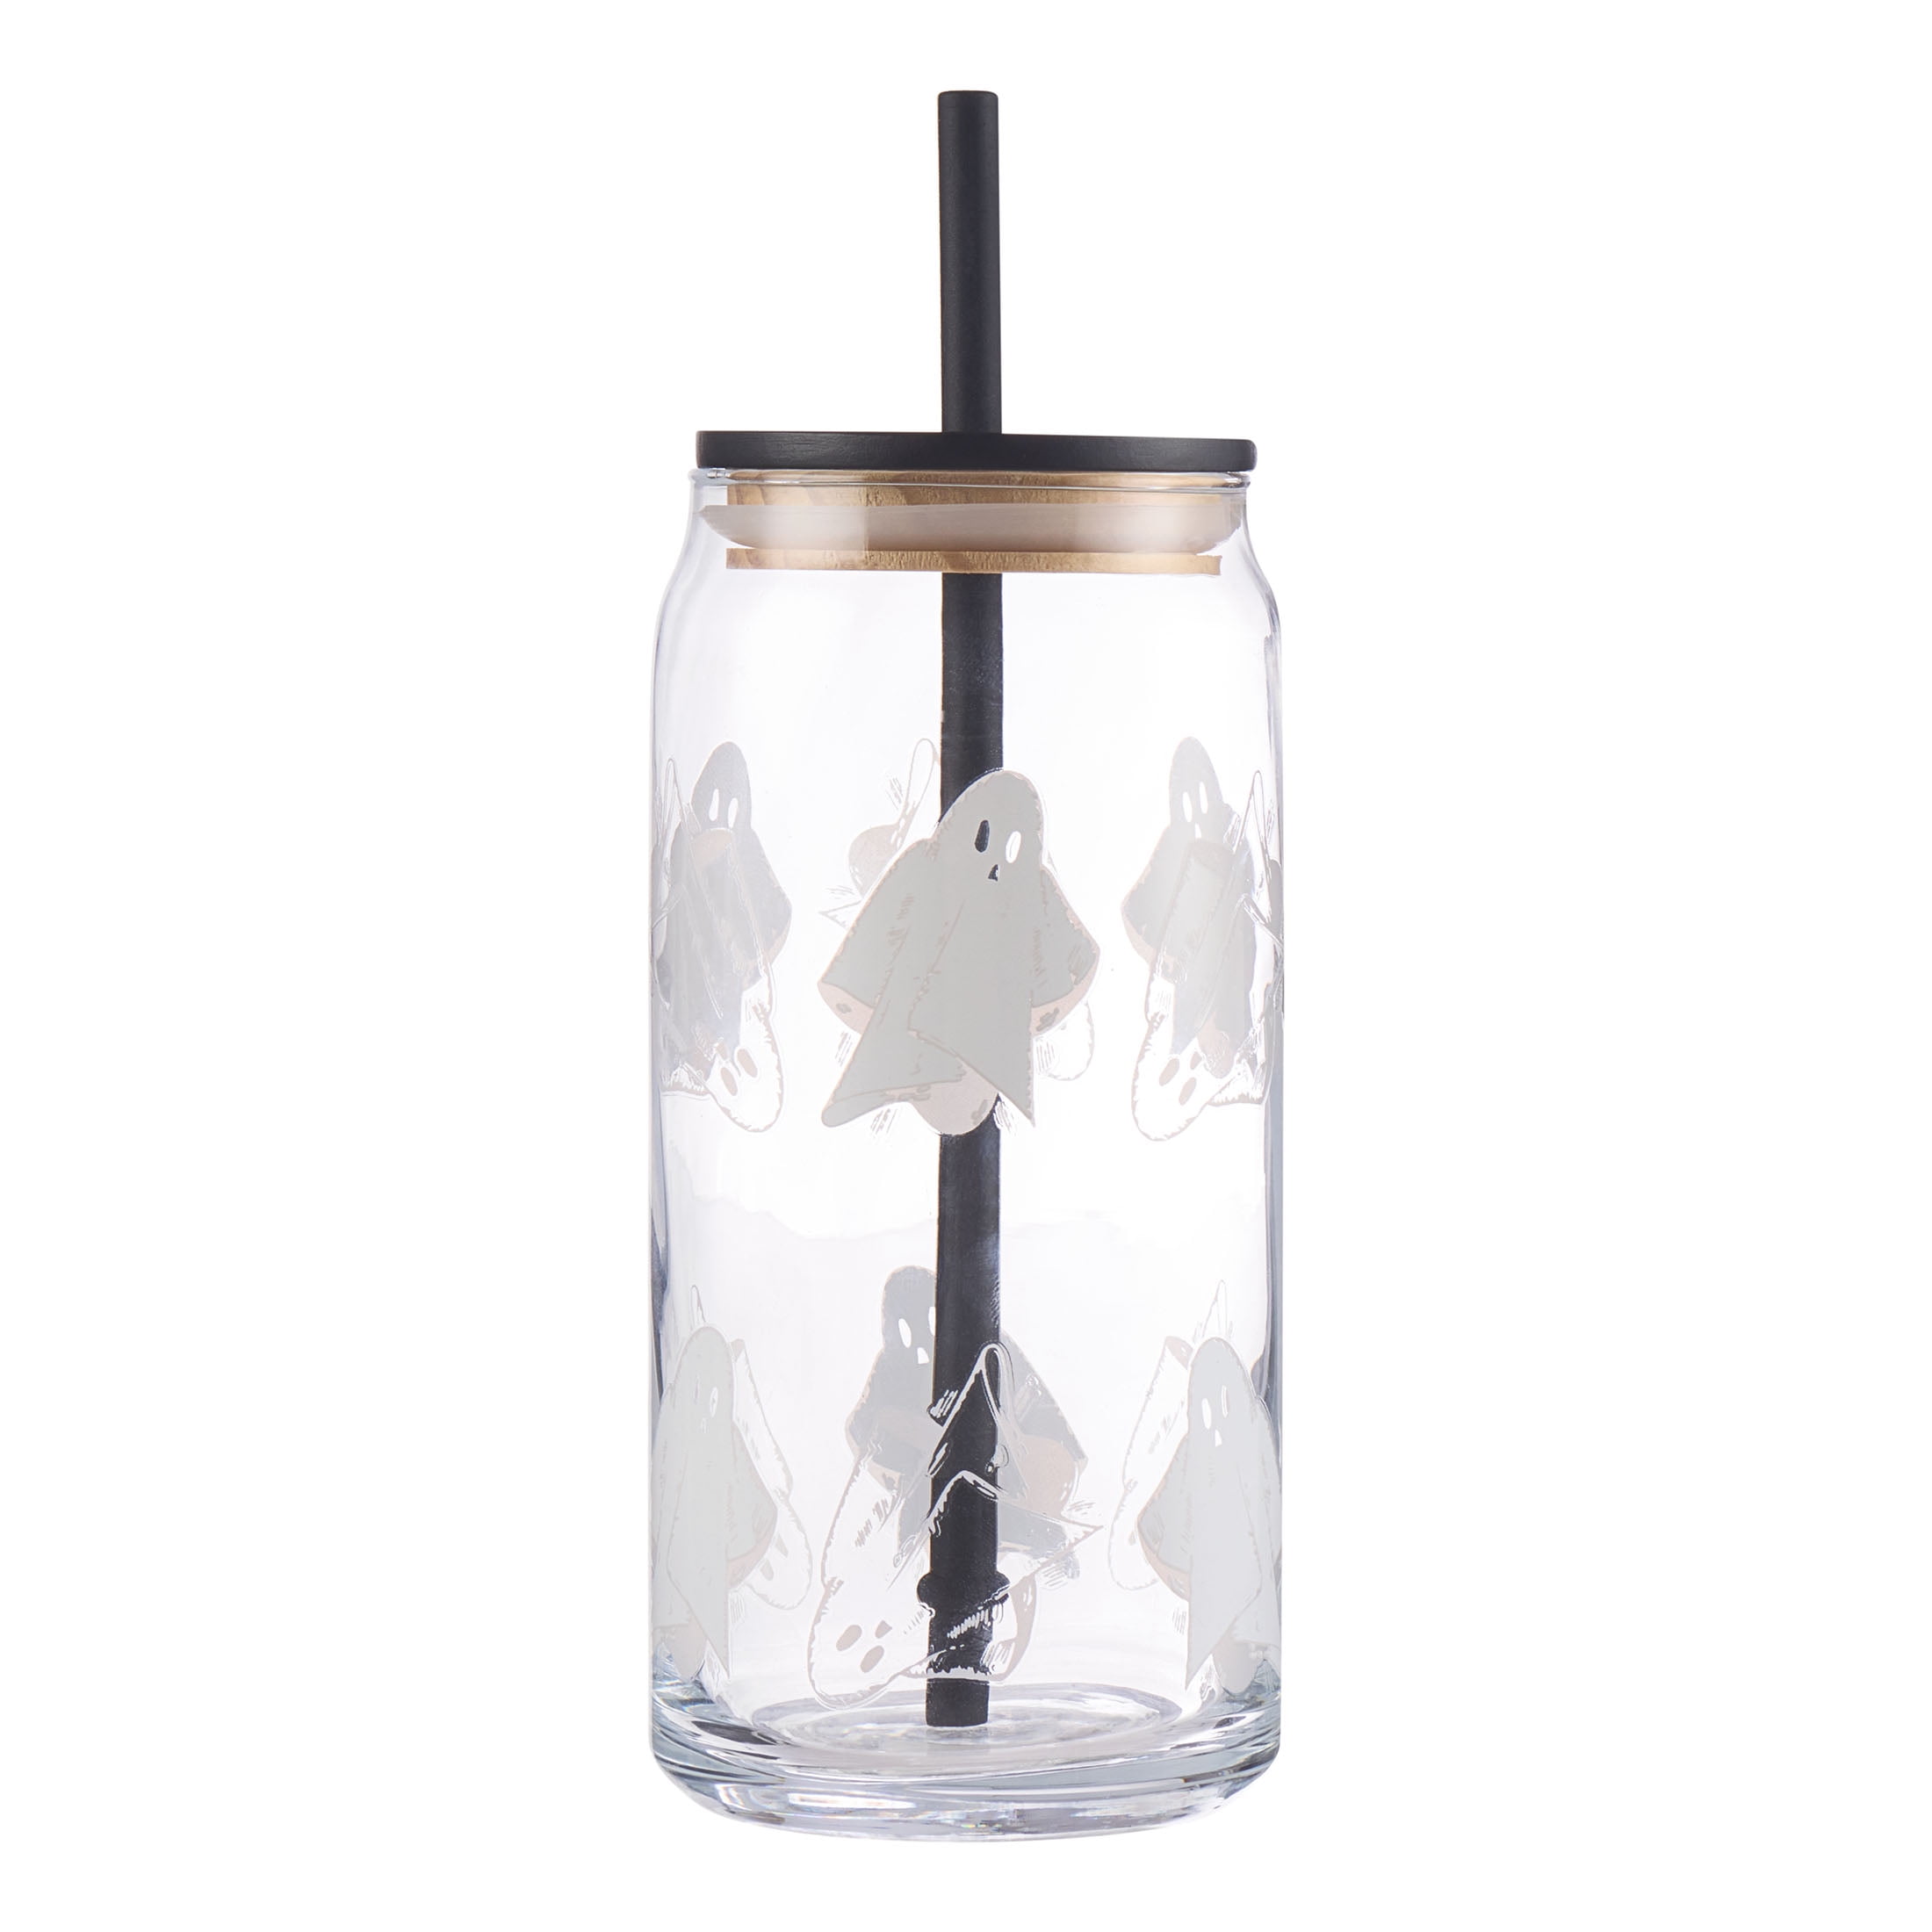 glass tumbler with straw mr price home｜TikTok Search